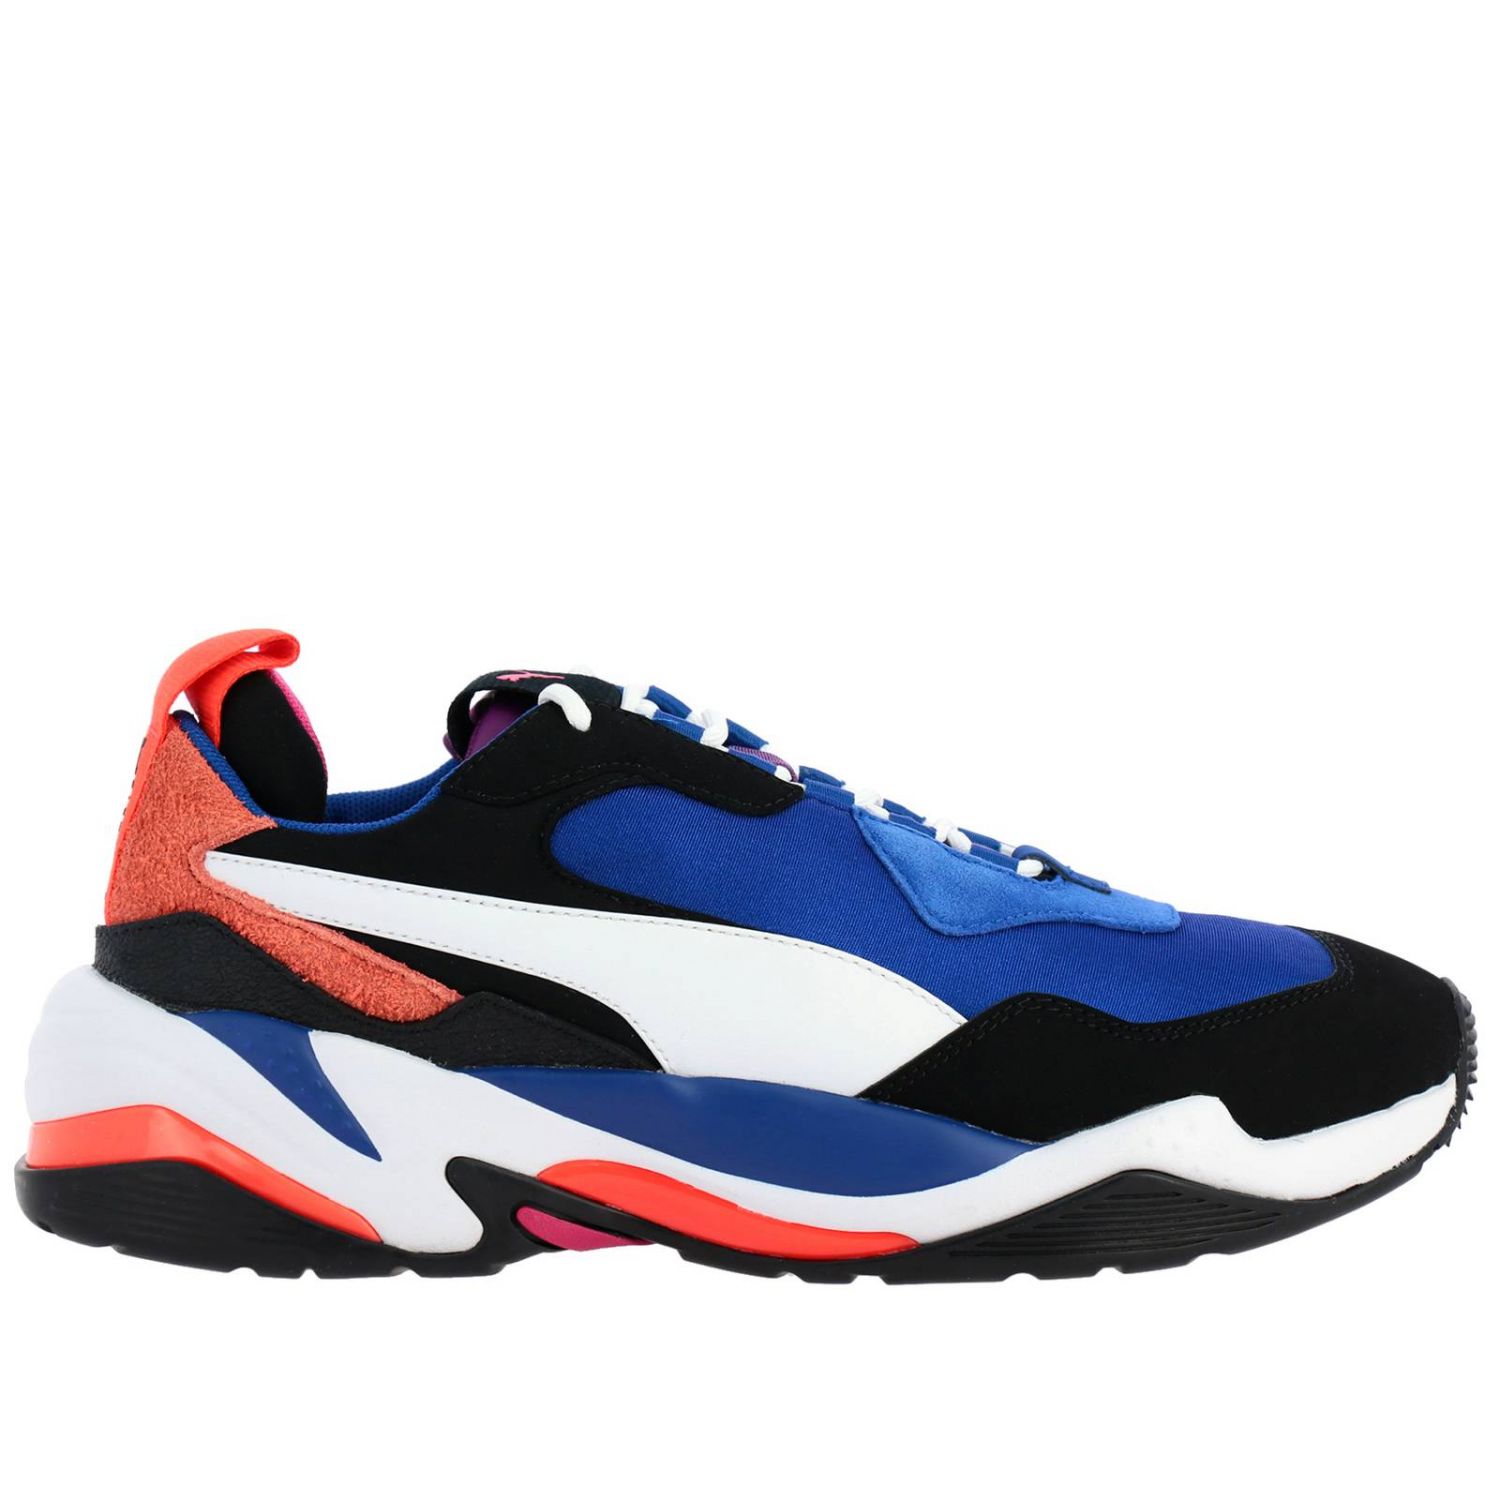 Puma Outlet: Shoes men | Sneakers Puma Men Royal Blue | Sneakers Puma ...